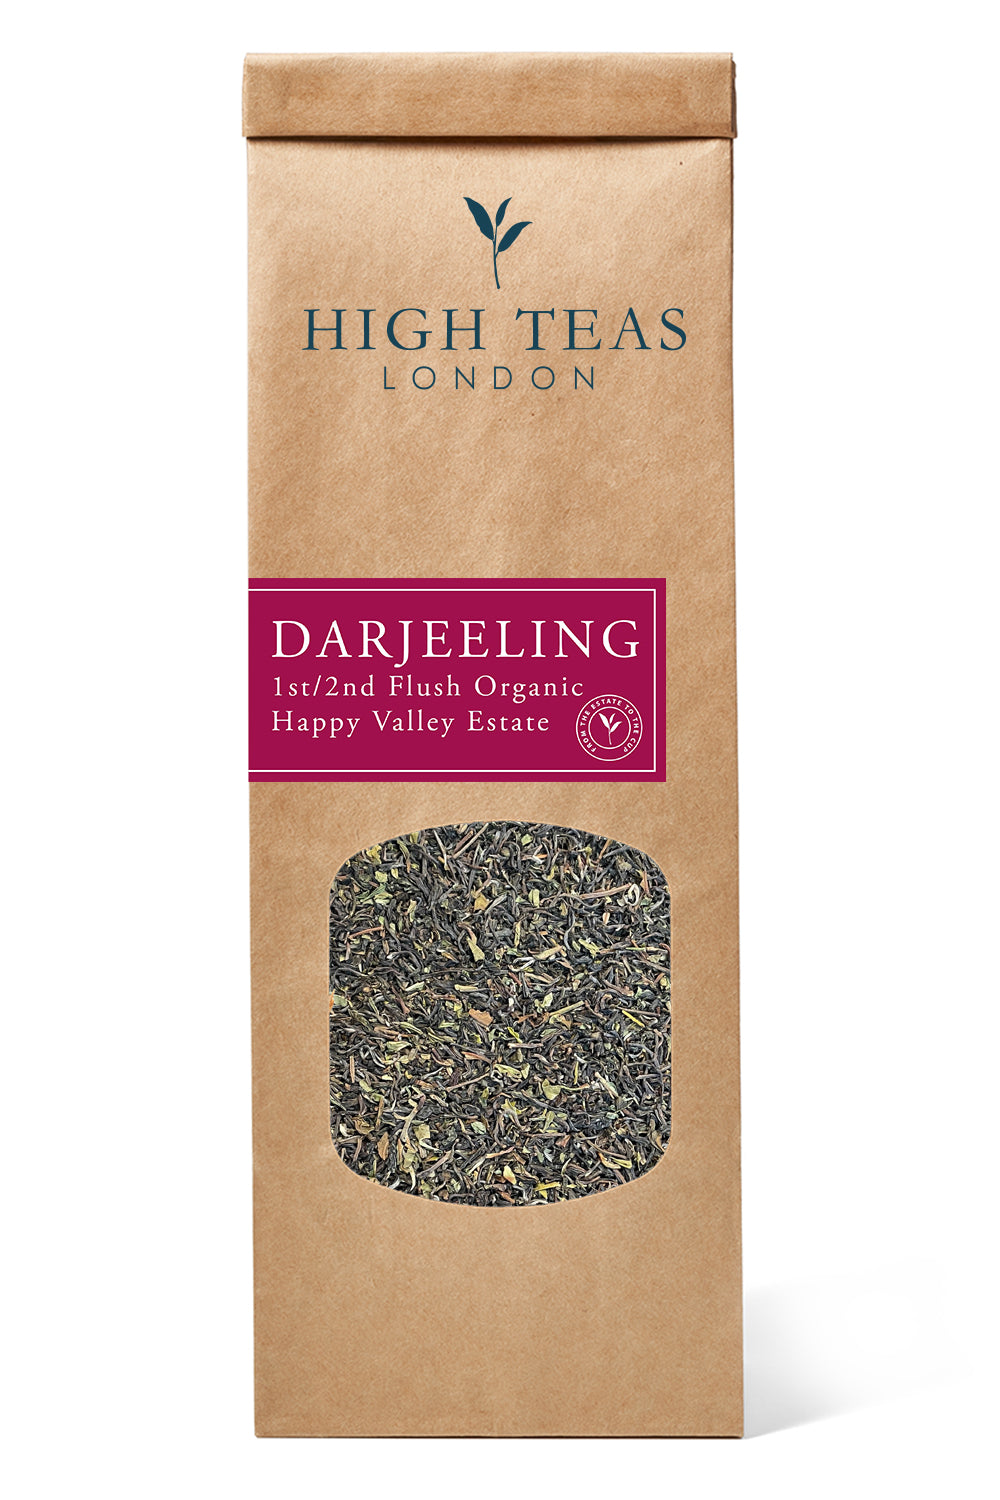 Darjeeling - 1st/2nd Flush Blend Organic FTGFOP1, Happy Valley Estate-50g-Loose Leaf Tea-High Teas